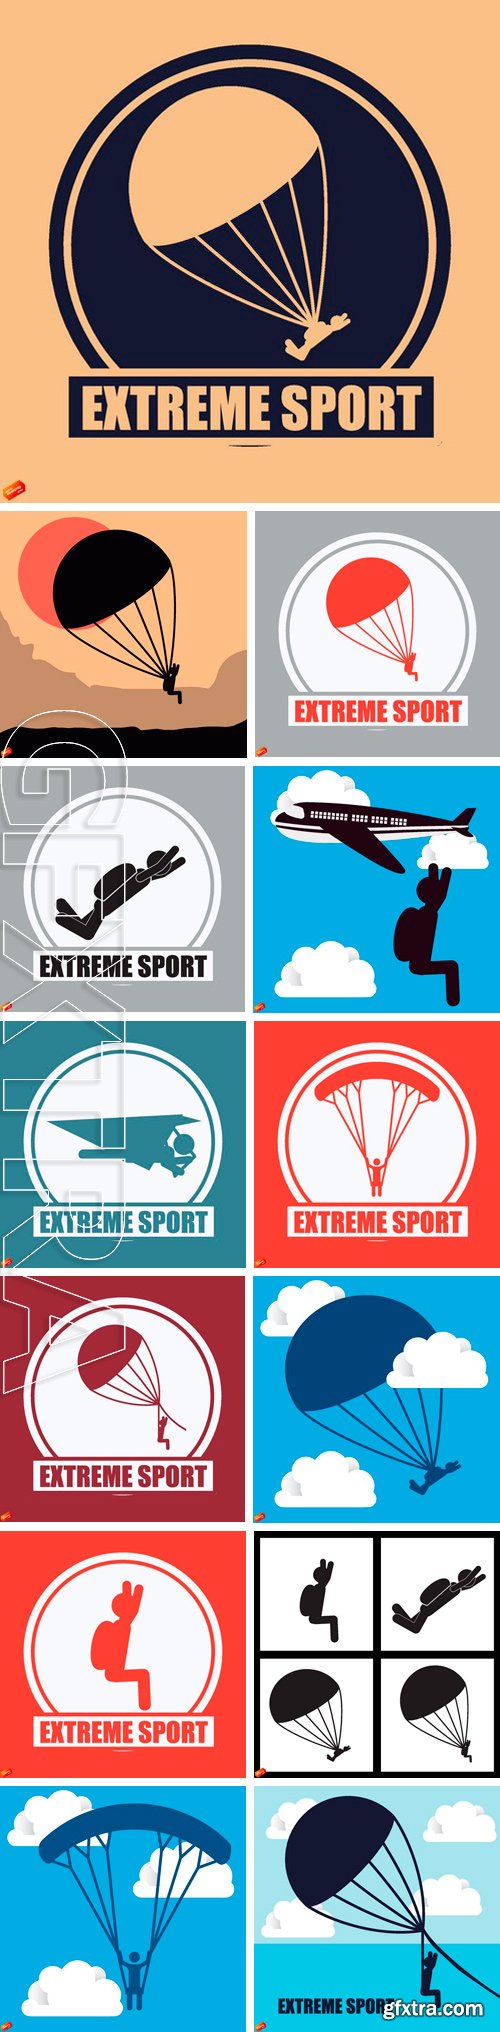 Stock Vectors - Extreme Sport design , vector illustration